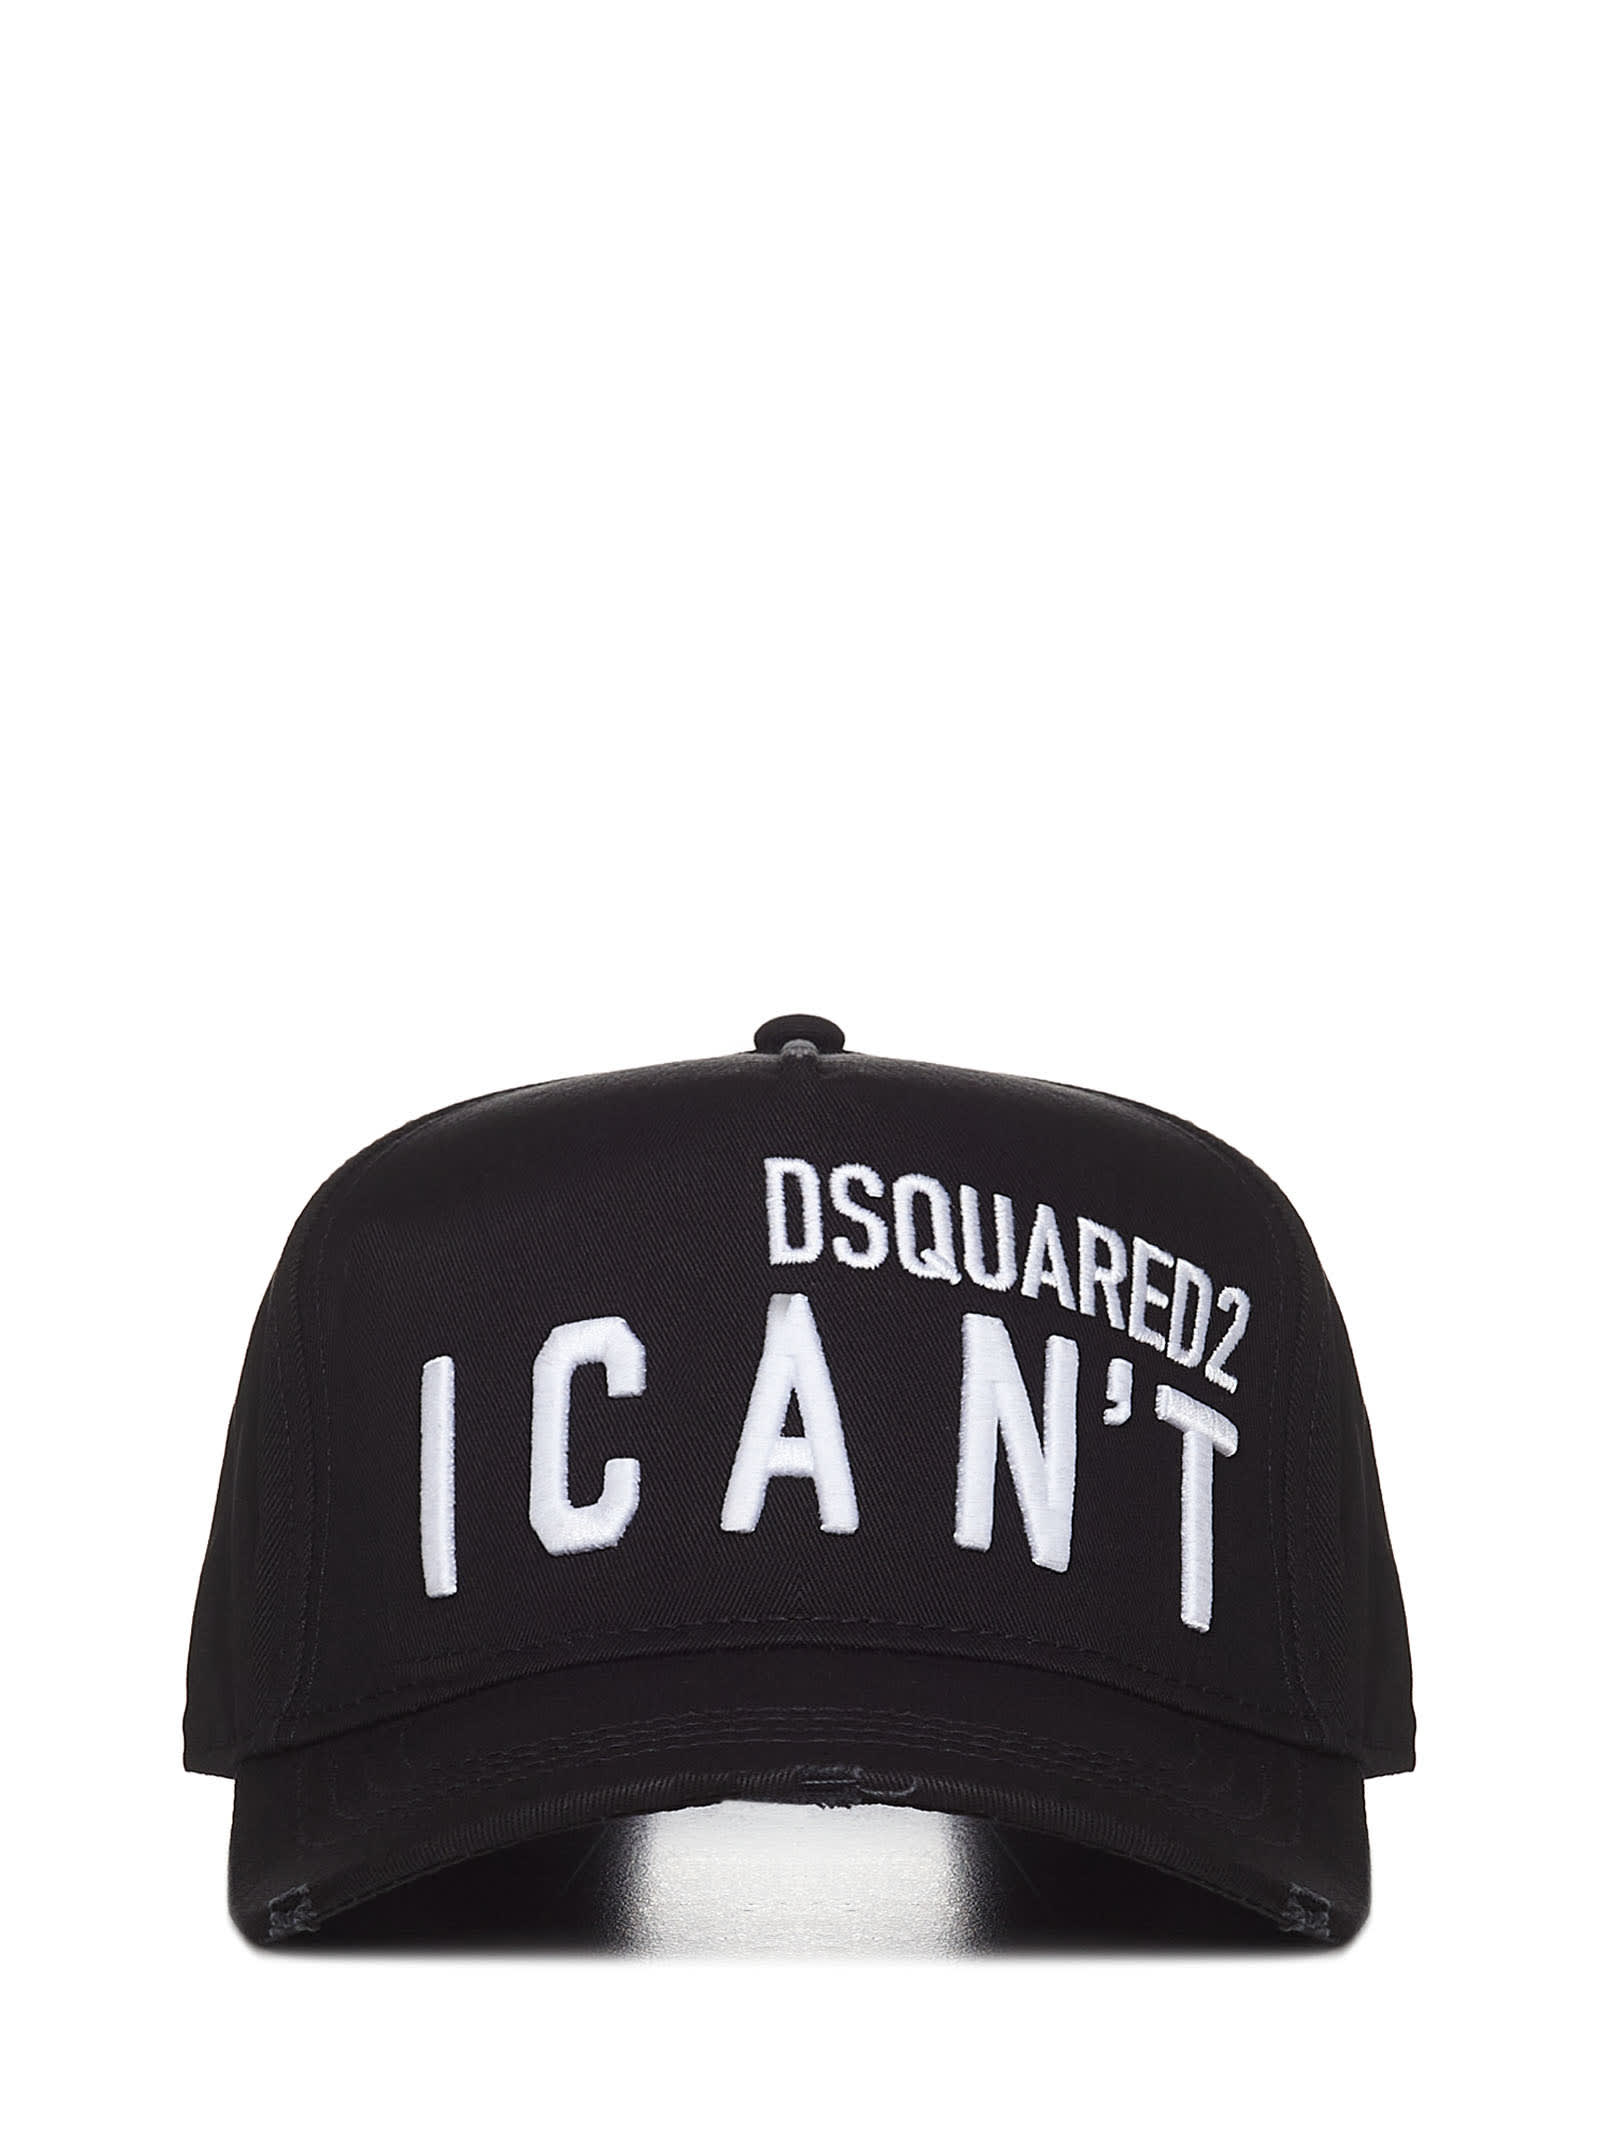 Dsquared2 I Cant Hat